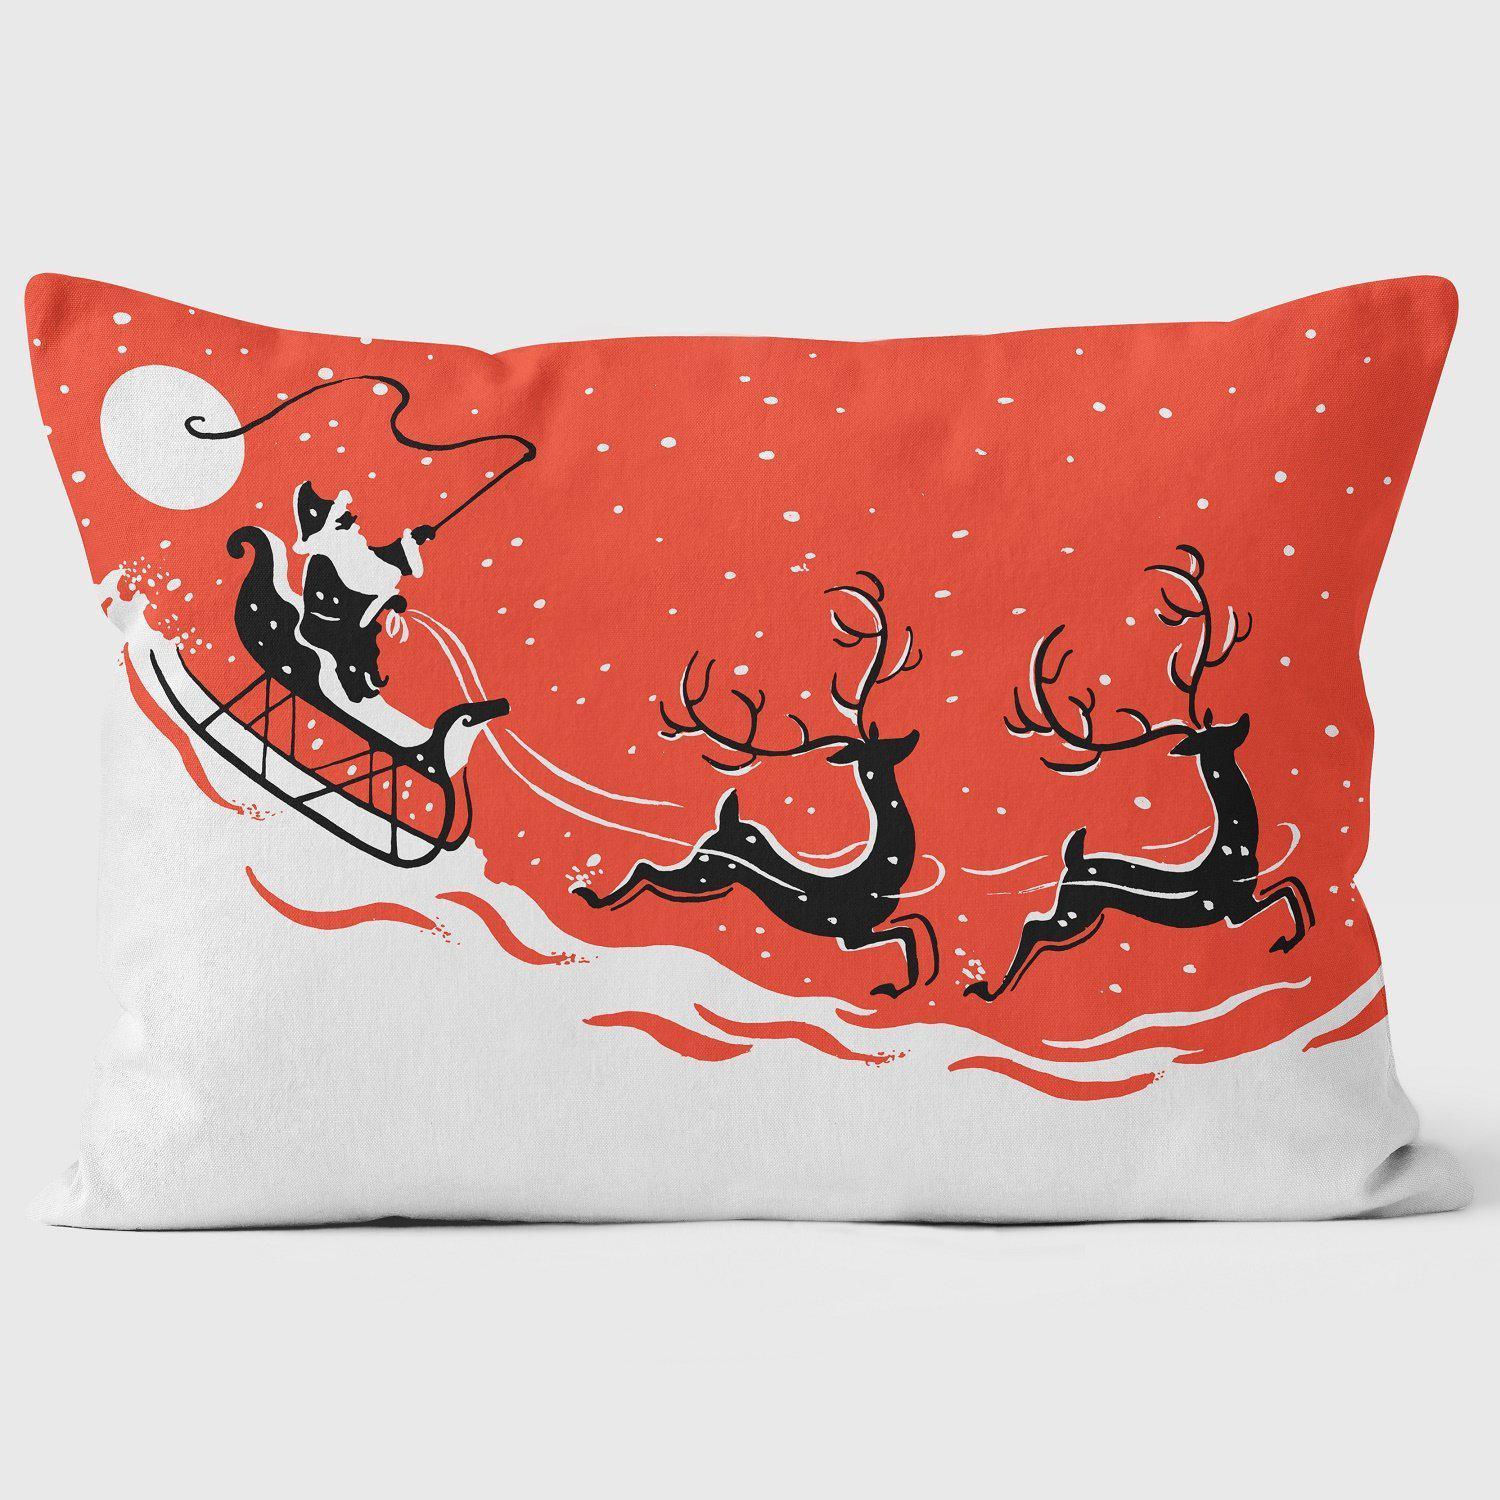 Driving Through The Snow - Christmas Cushion - Handmade Cushions UK - WeLoveCushions